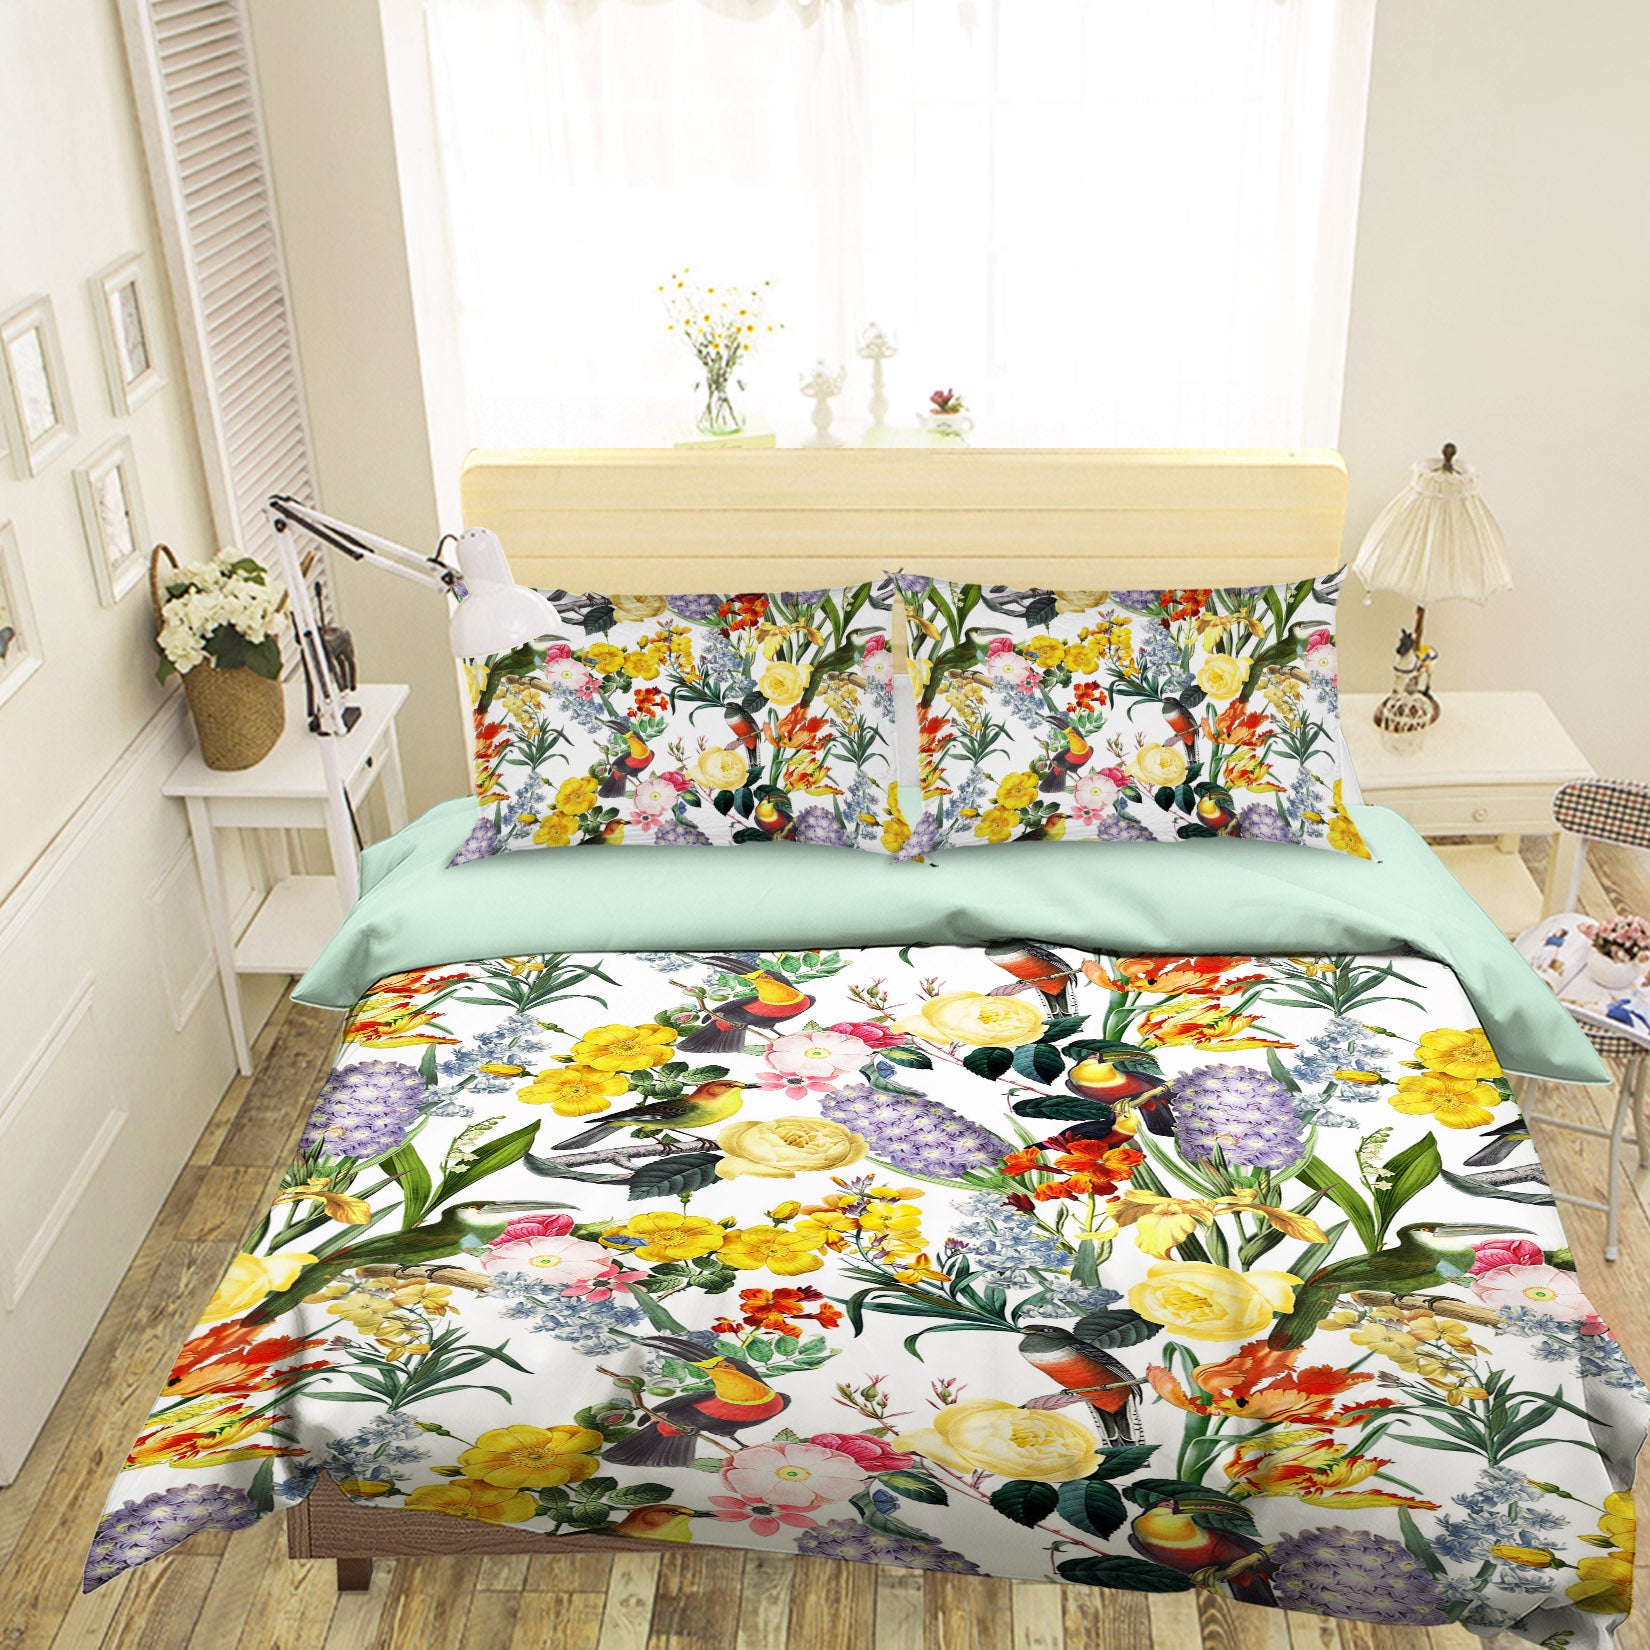 3D Fragrant Colored Flowers 146 Uta Naumann Bedding Bed Pillowcases Quilt